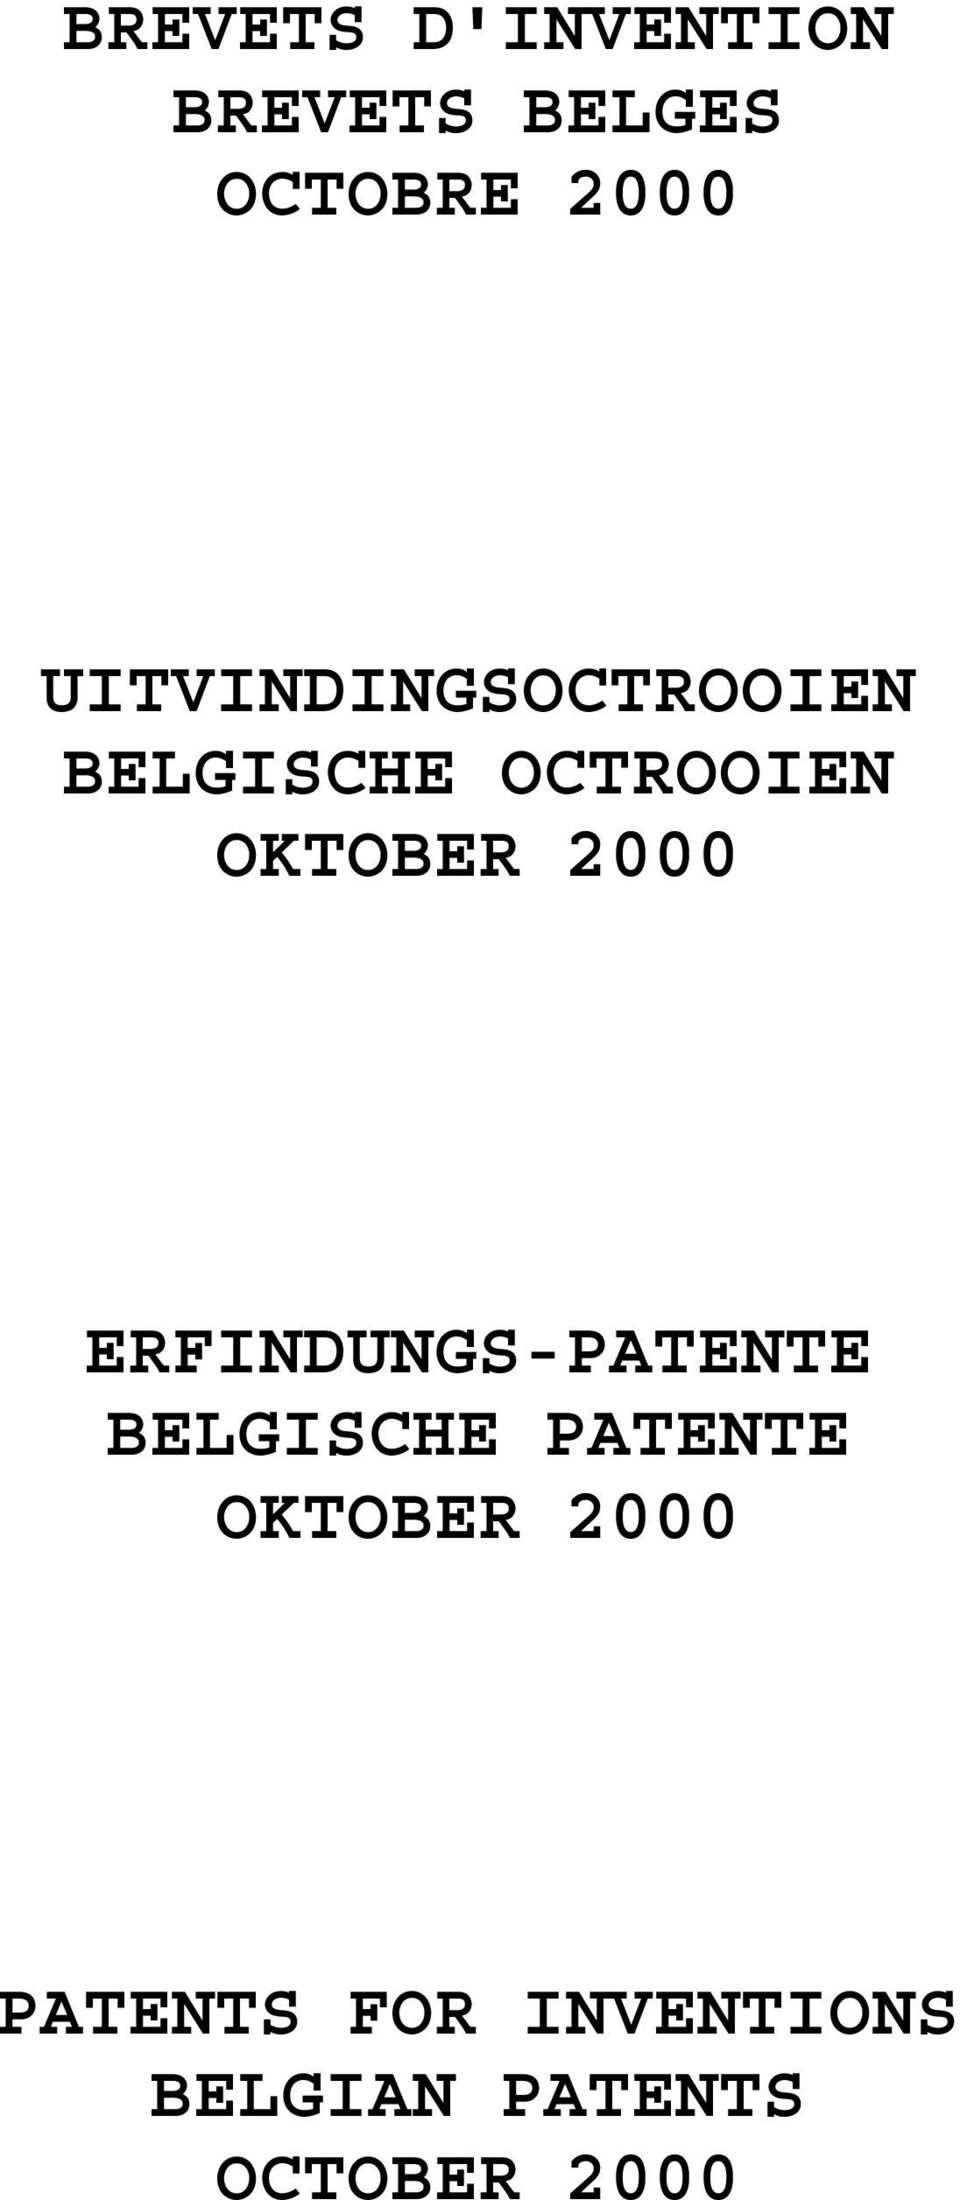 2000 ERFINDUNGS-PATENTE BELGISCHE PATENTE OKTOBER